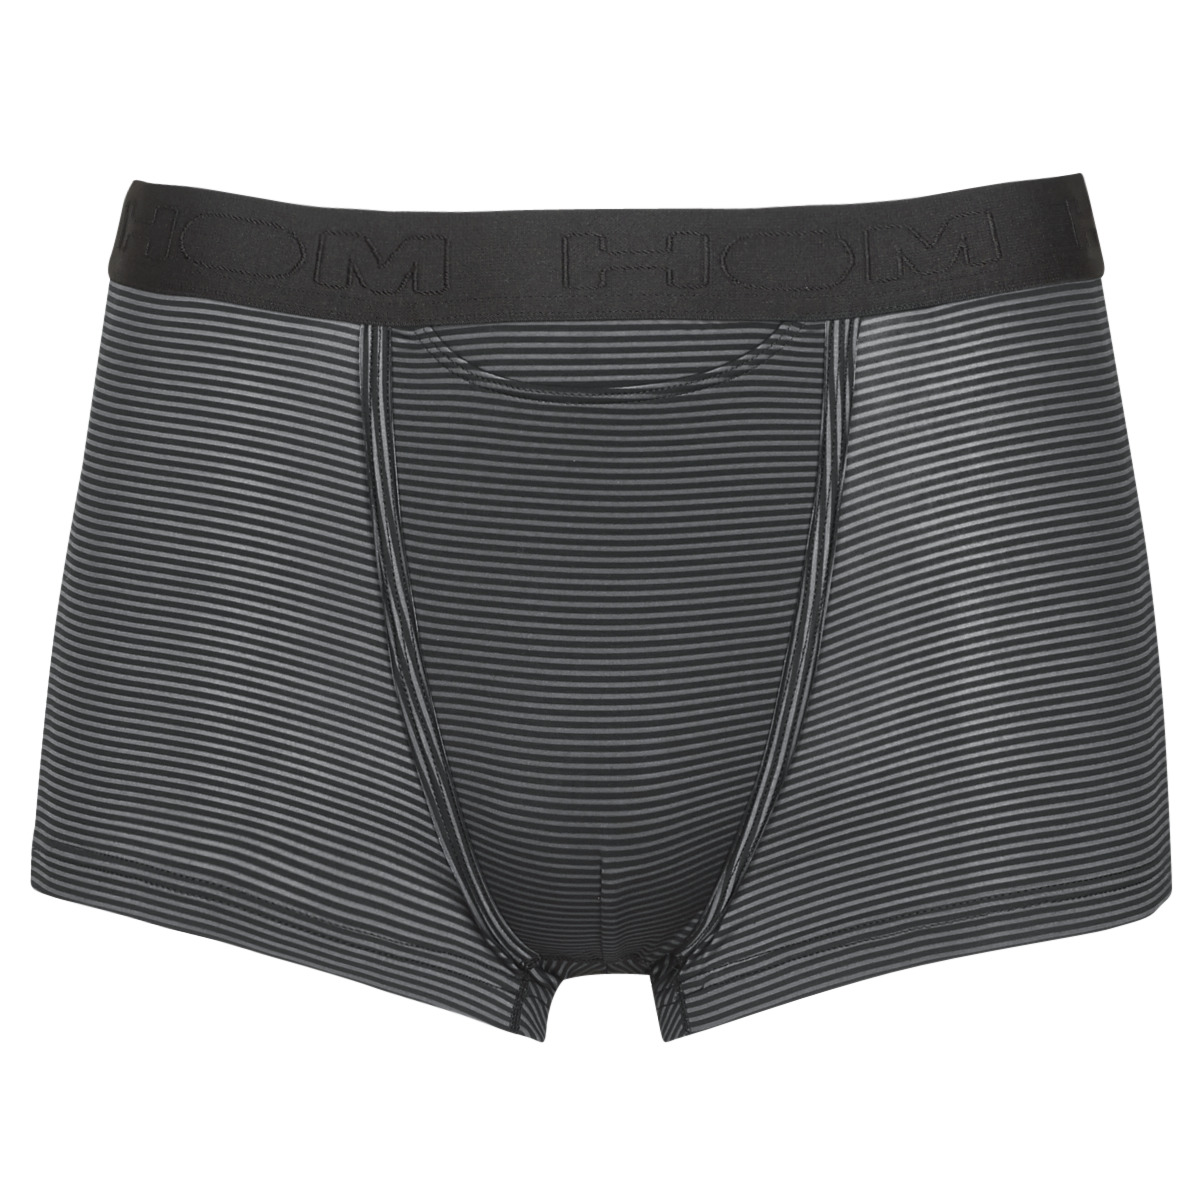 Hom SIMON BOXER BRIEF HO1 Black / White - Fast delivery  Spartoo Europe !  - Underwear Boxer shorts Men 37,60 €